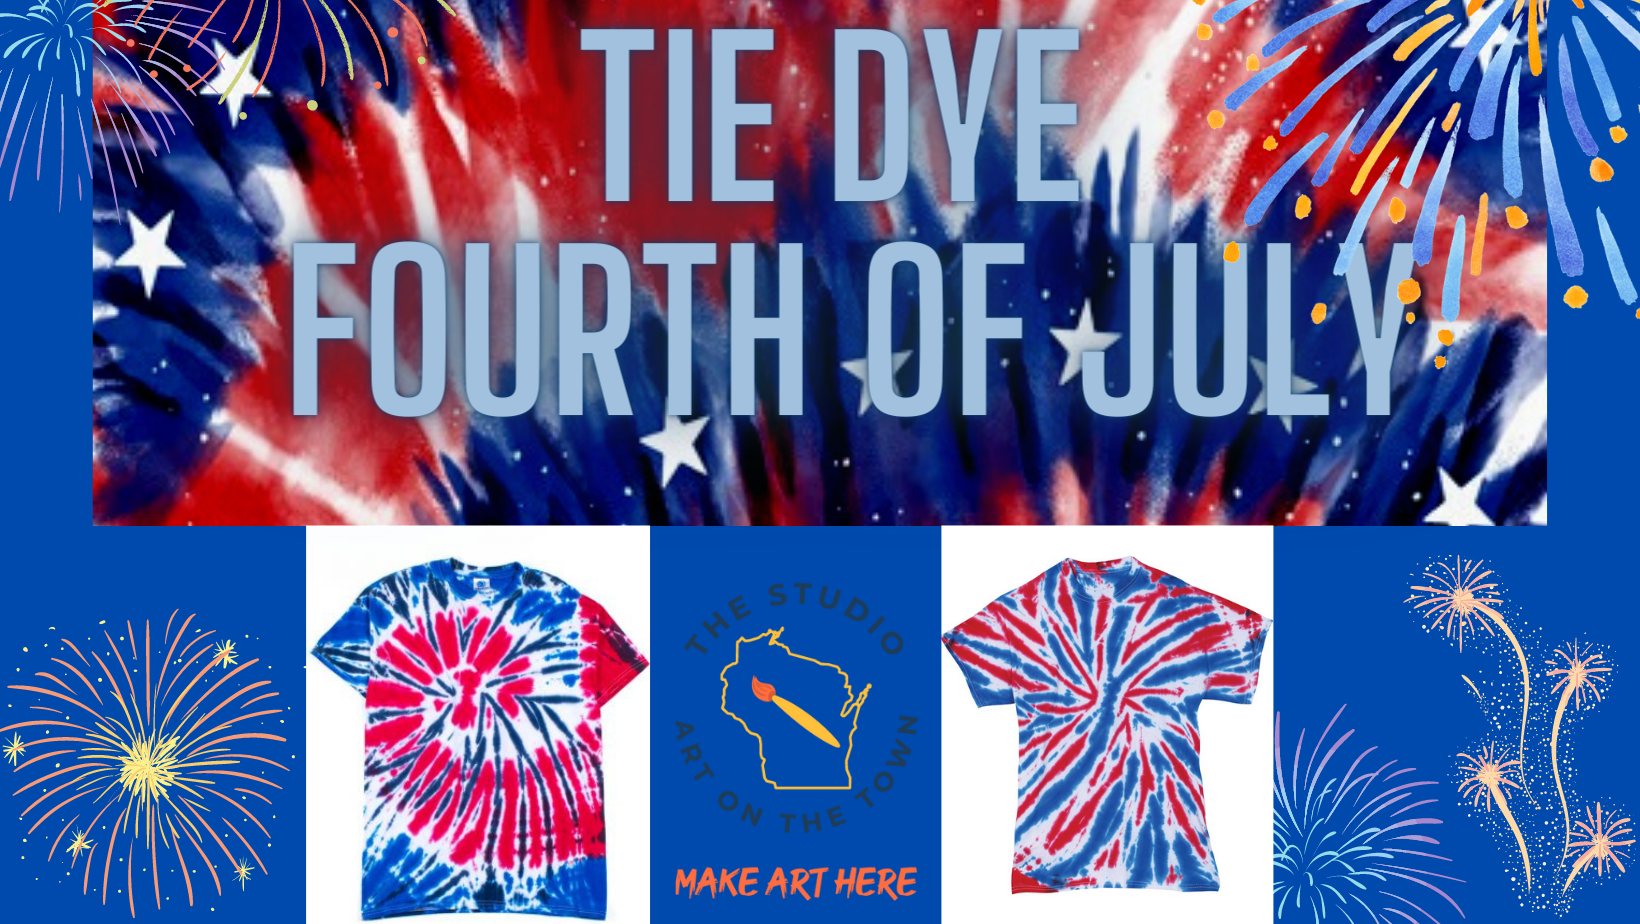 Tie dye fourth of july